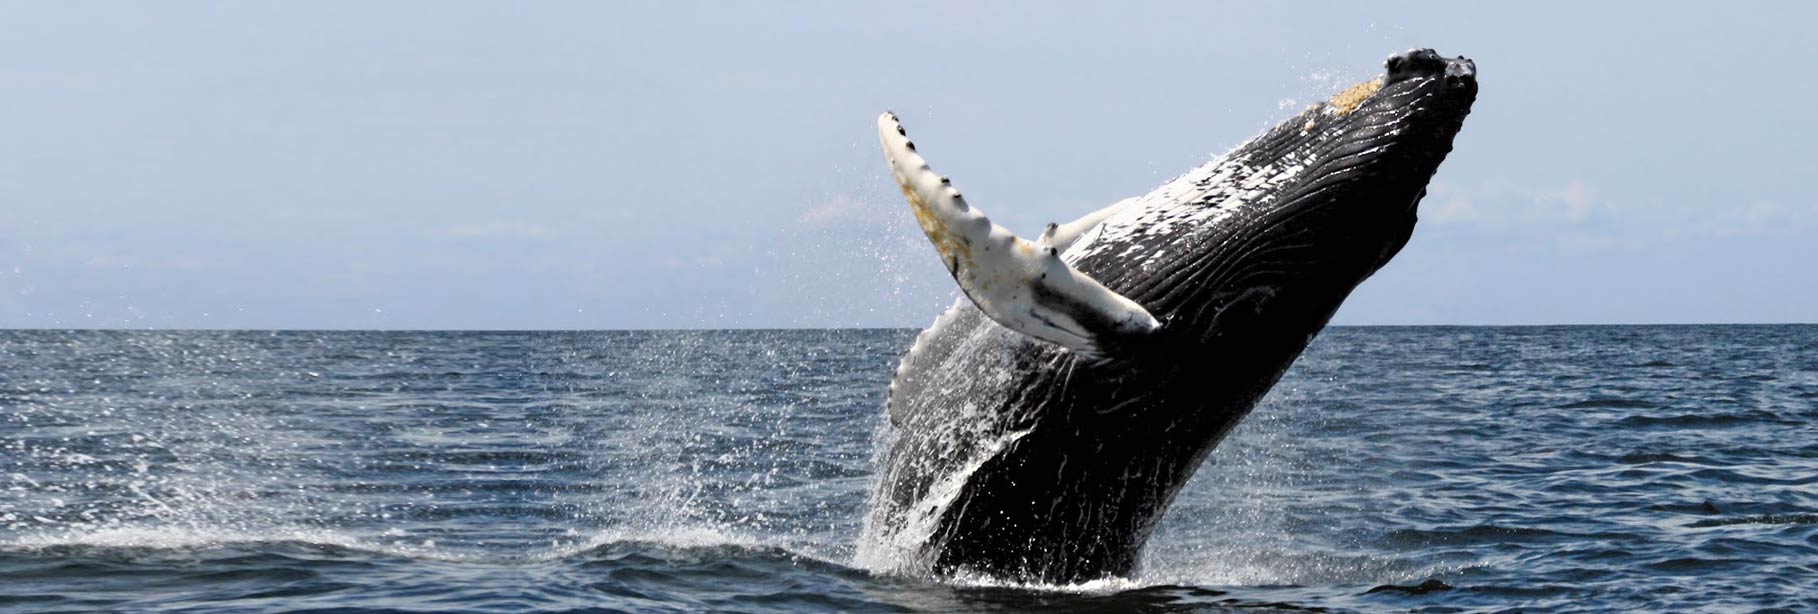 Baleias Jubarte